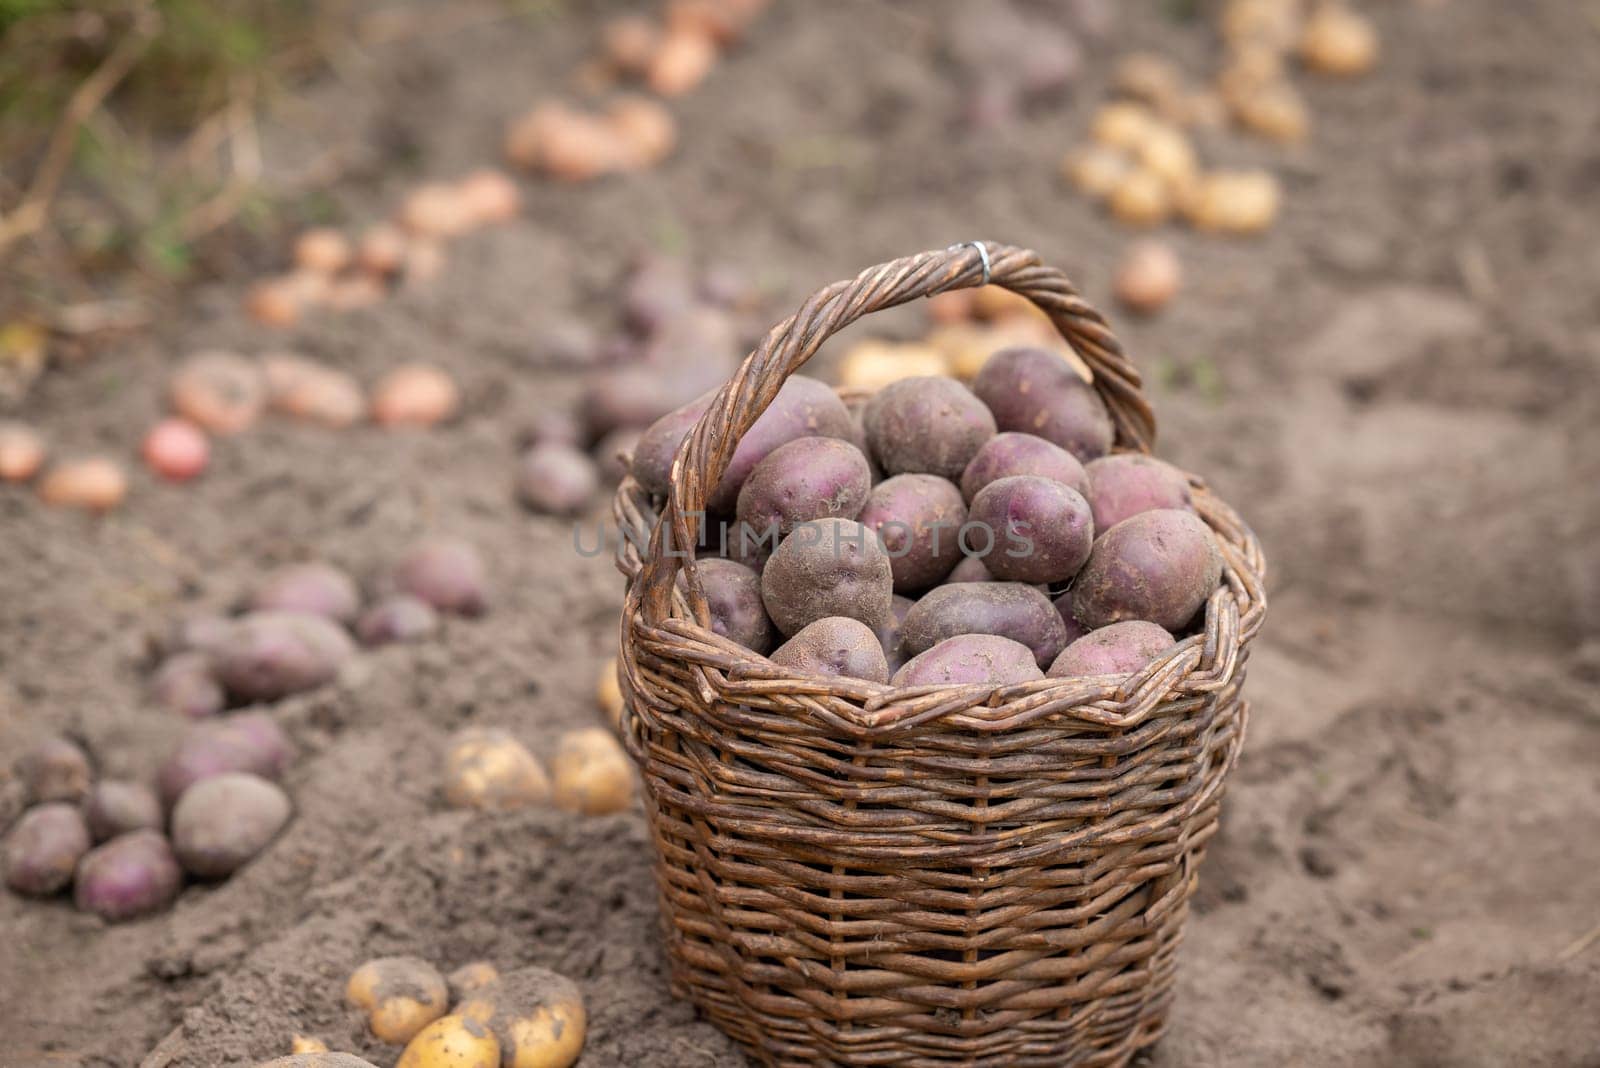 Just harvested potato in basket by VitaliiPetrushenko